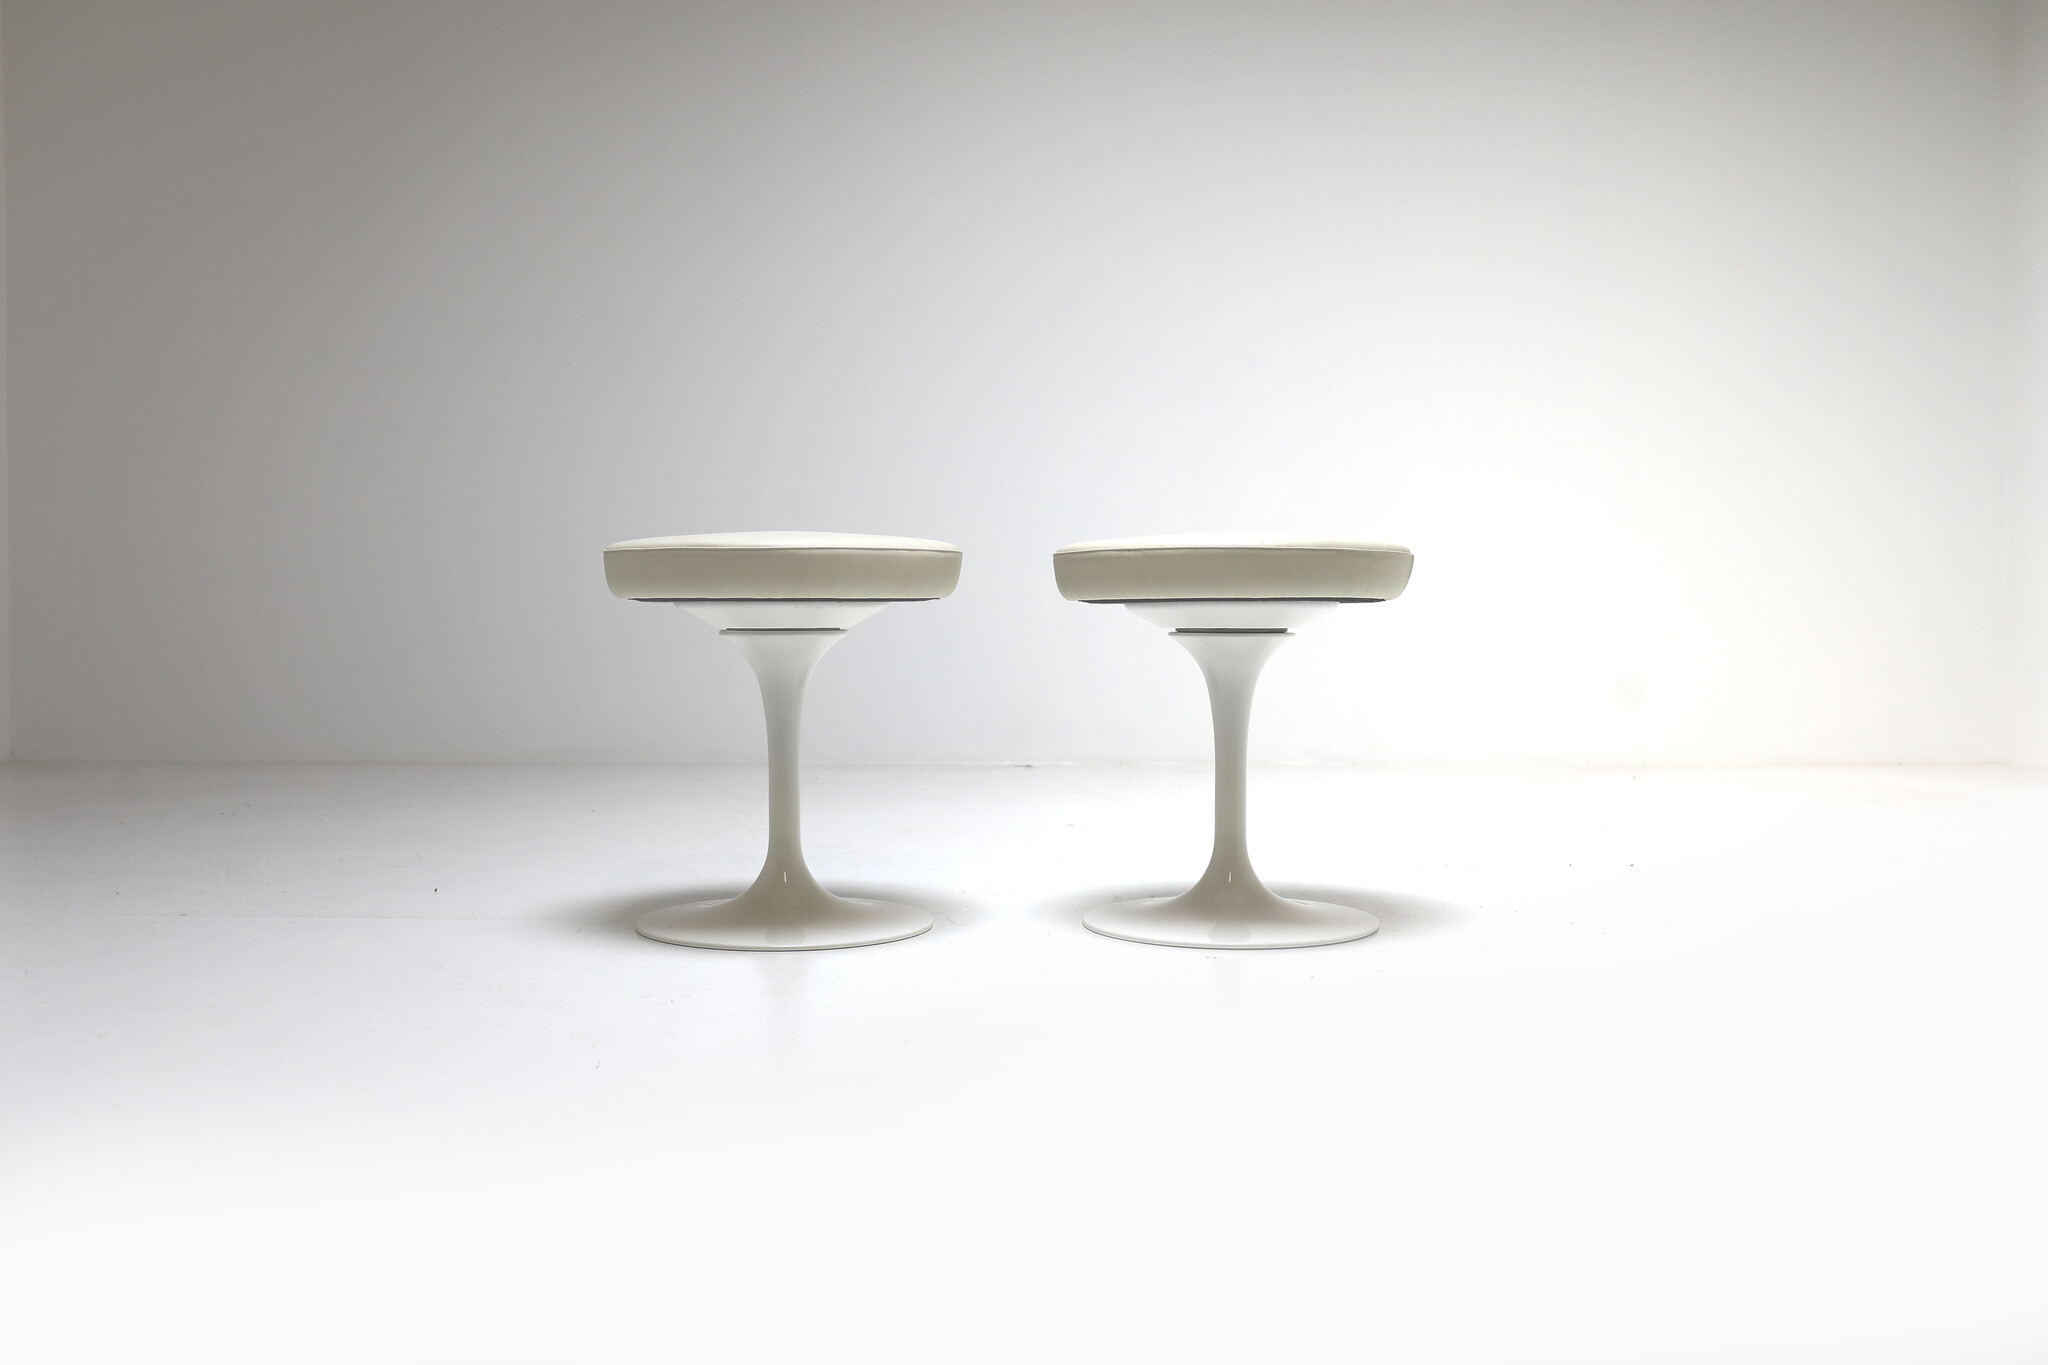 2 Tulip stools by Eero Saarinen for Knoll International